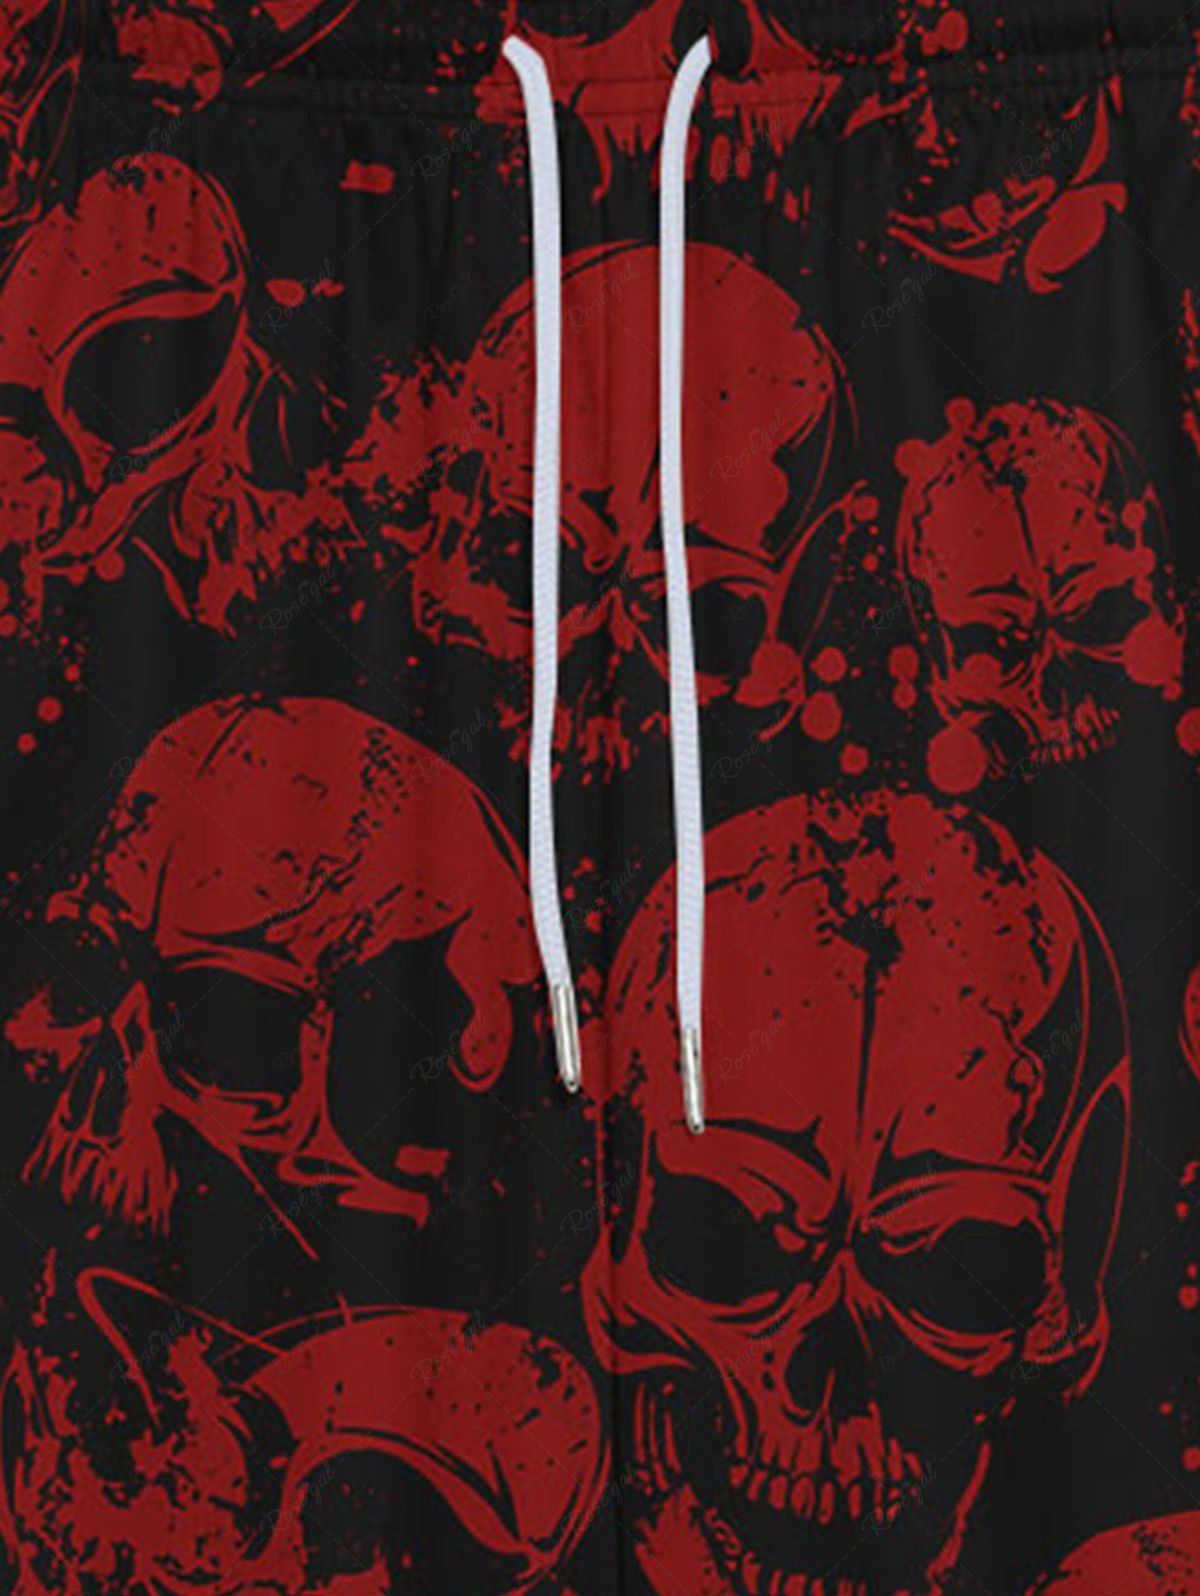 Gothic Bloody Skulls Print Pockets Drawstring Halloween Sweatpants For Men